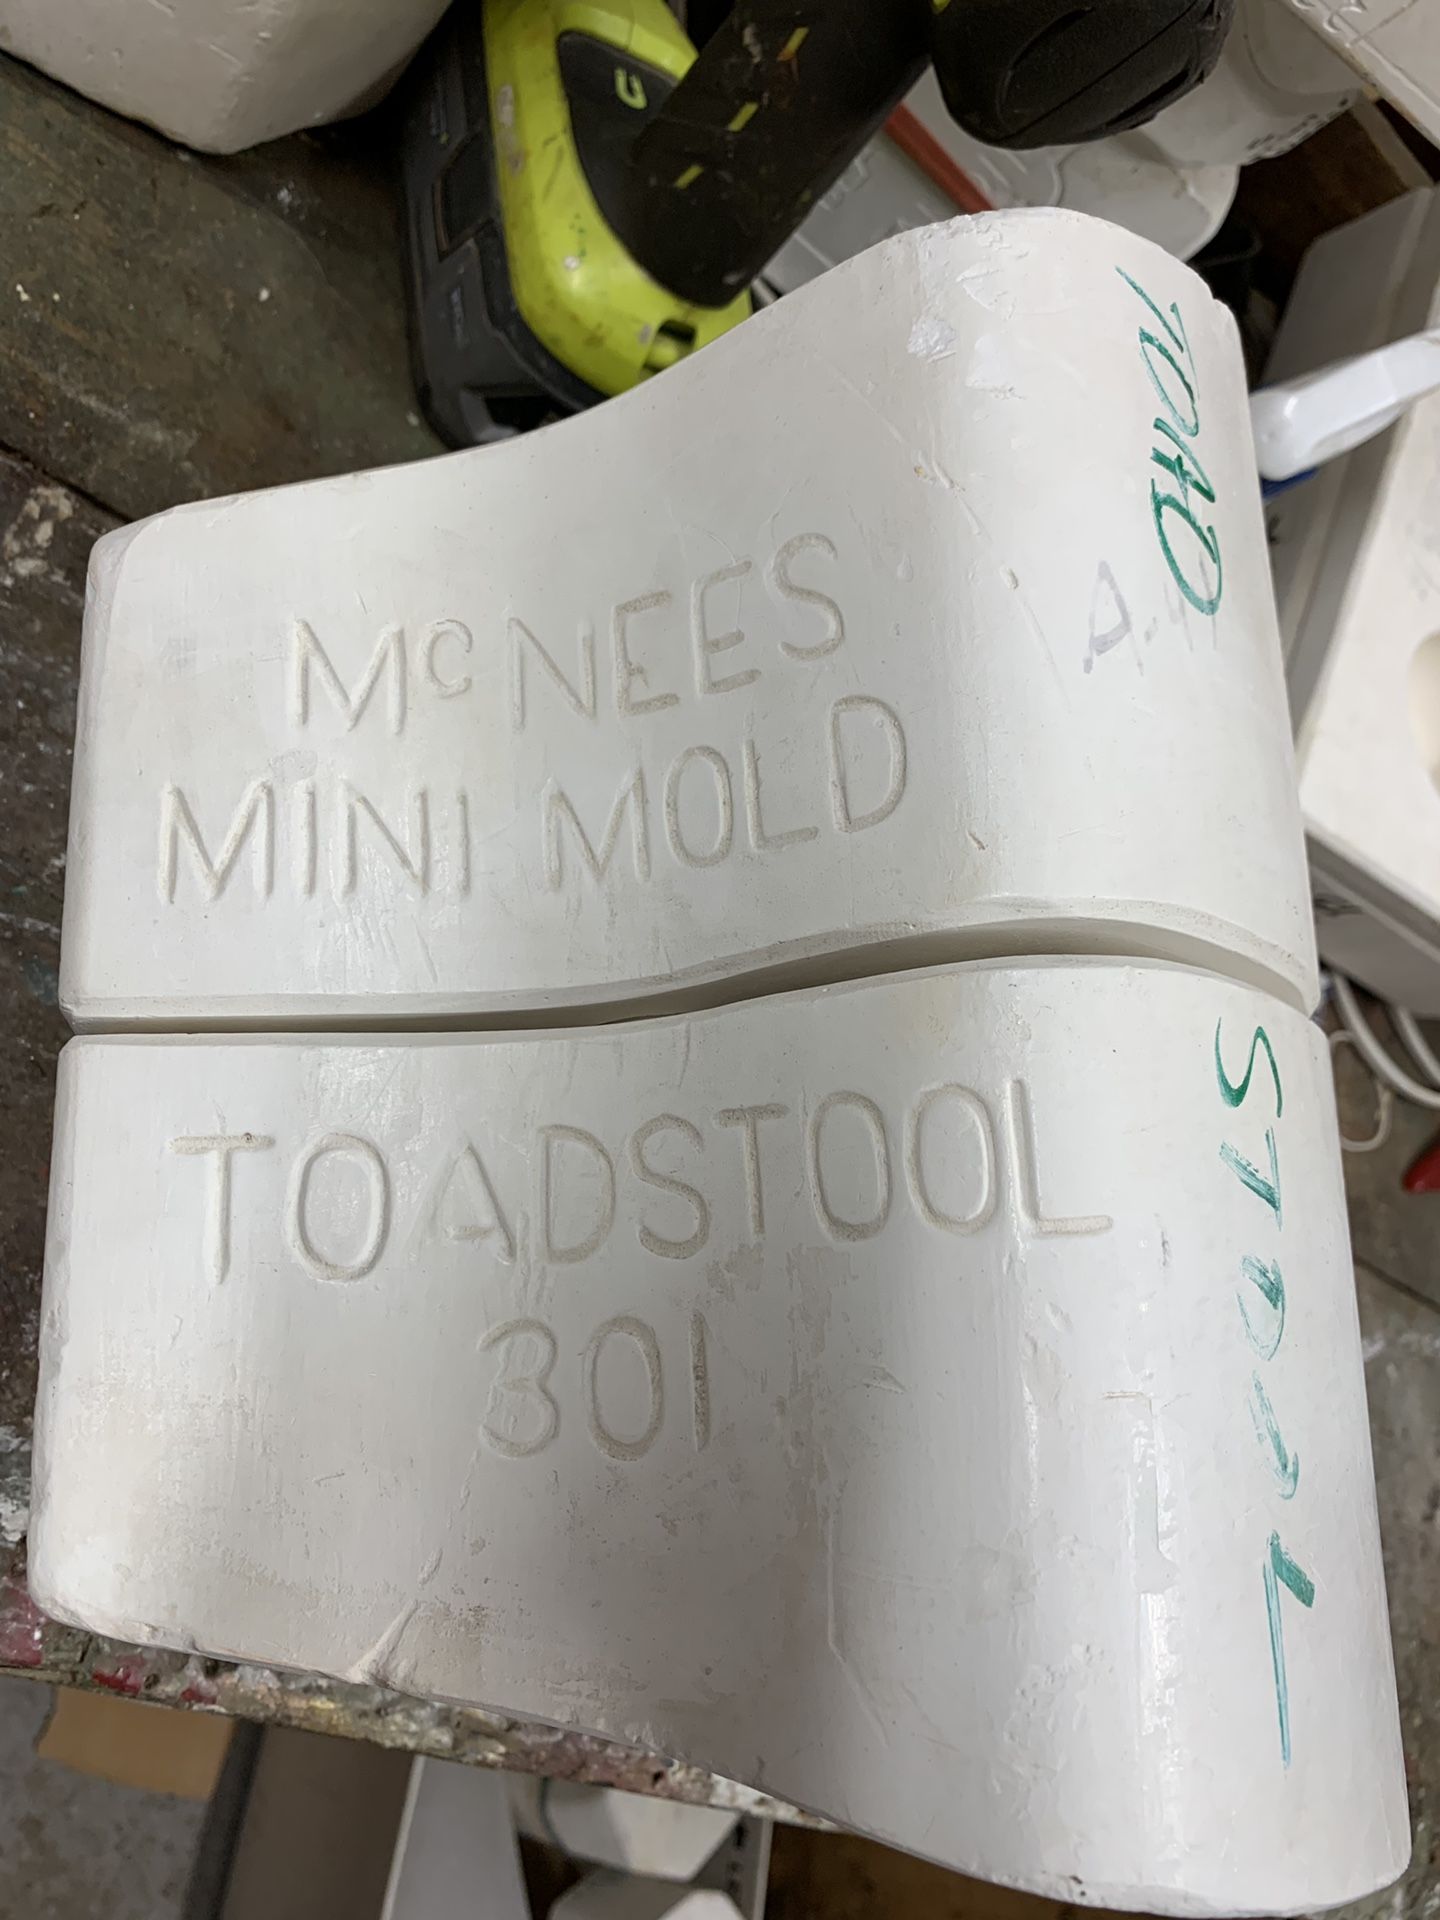 Toadstool mold